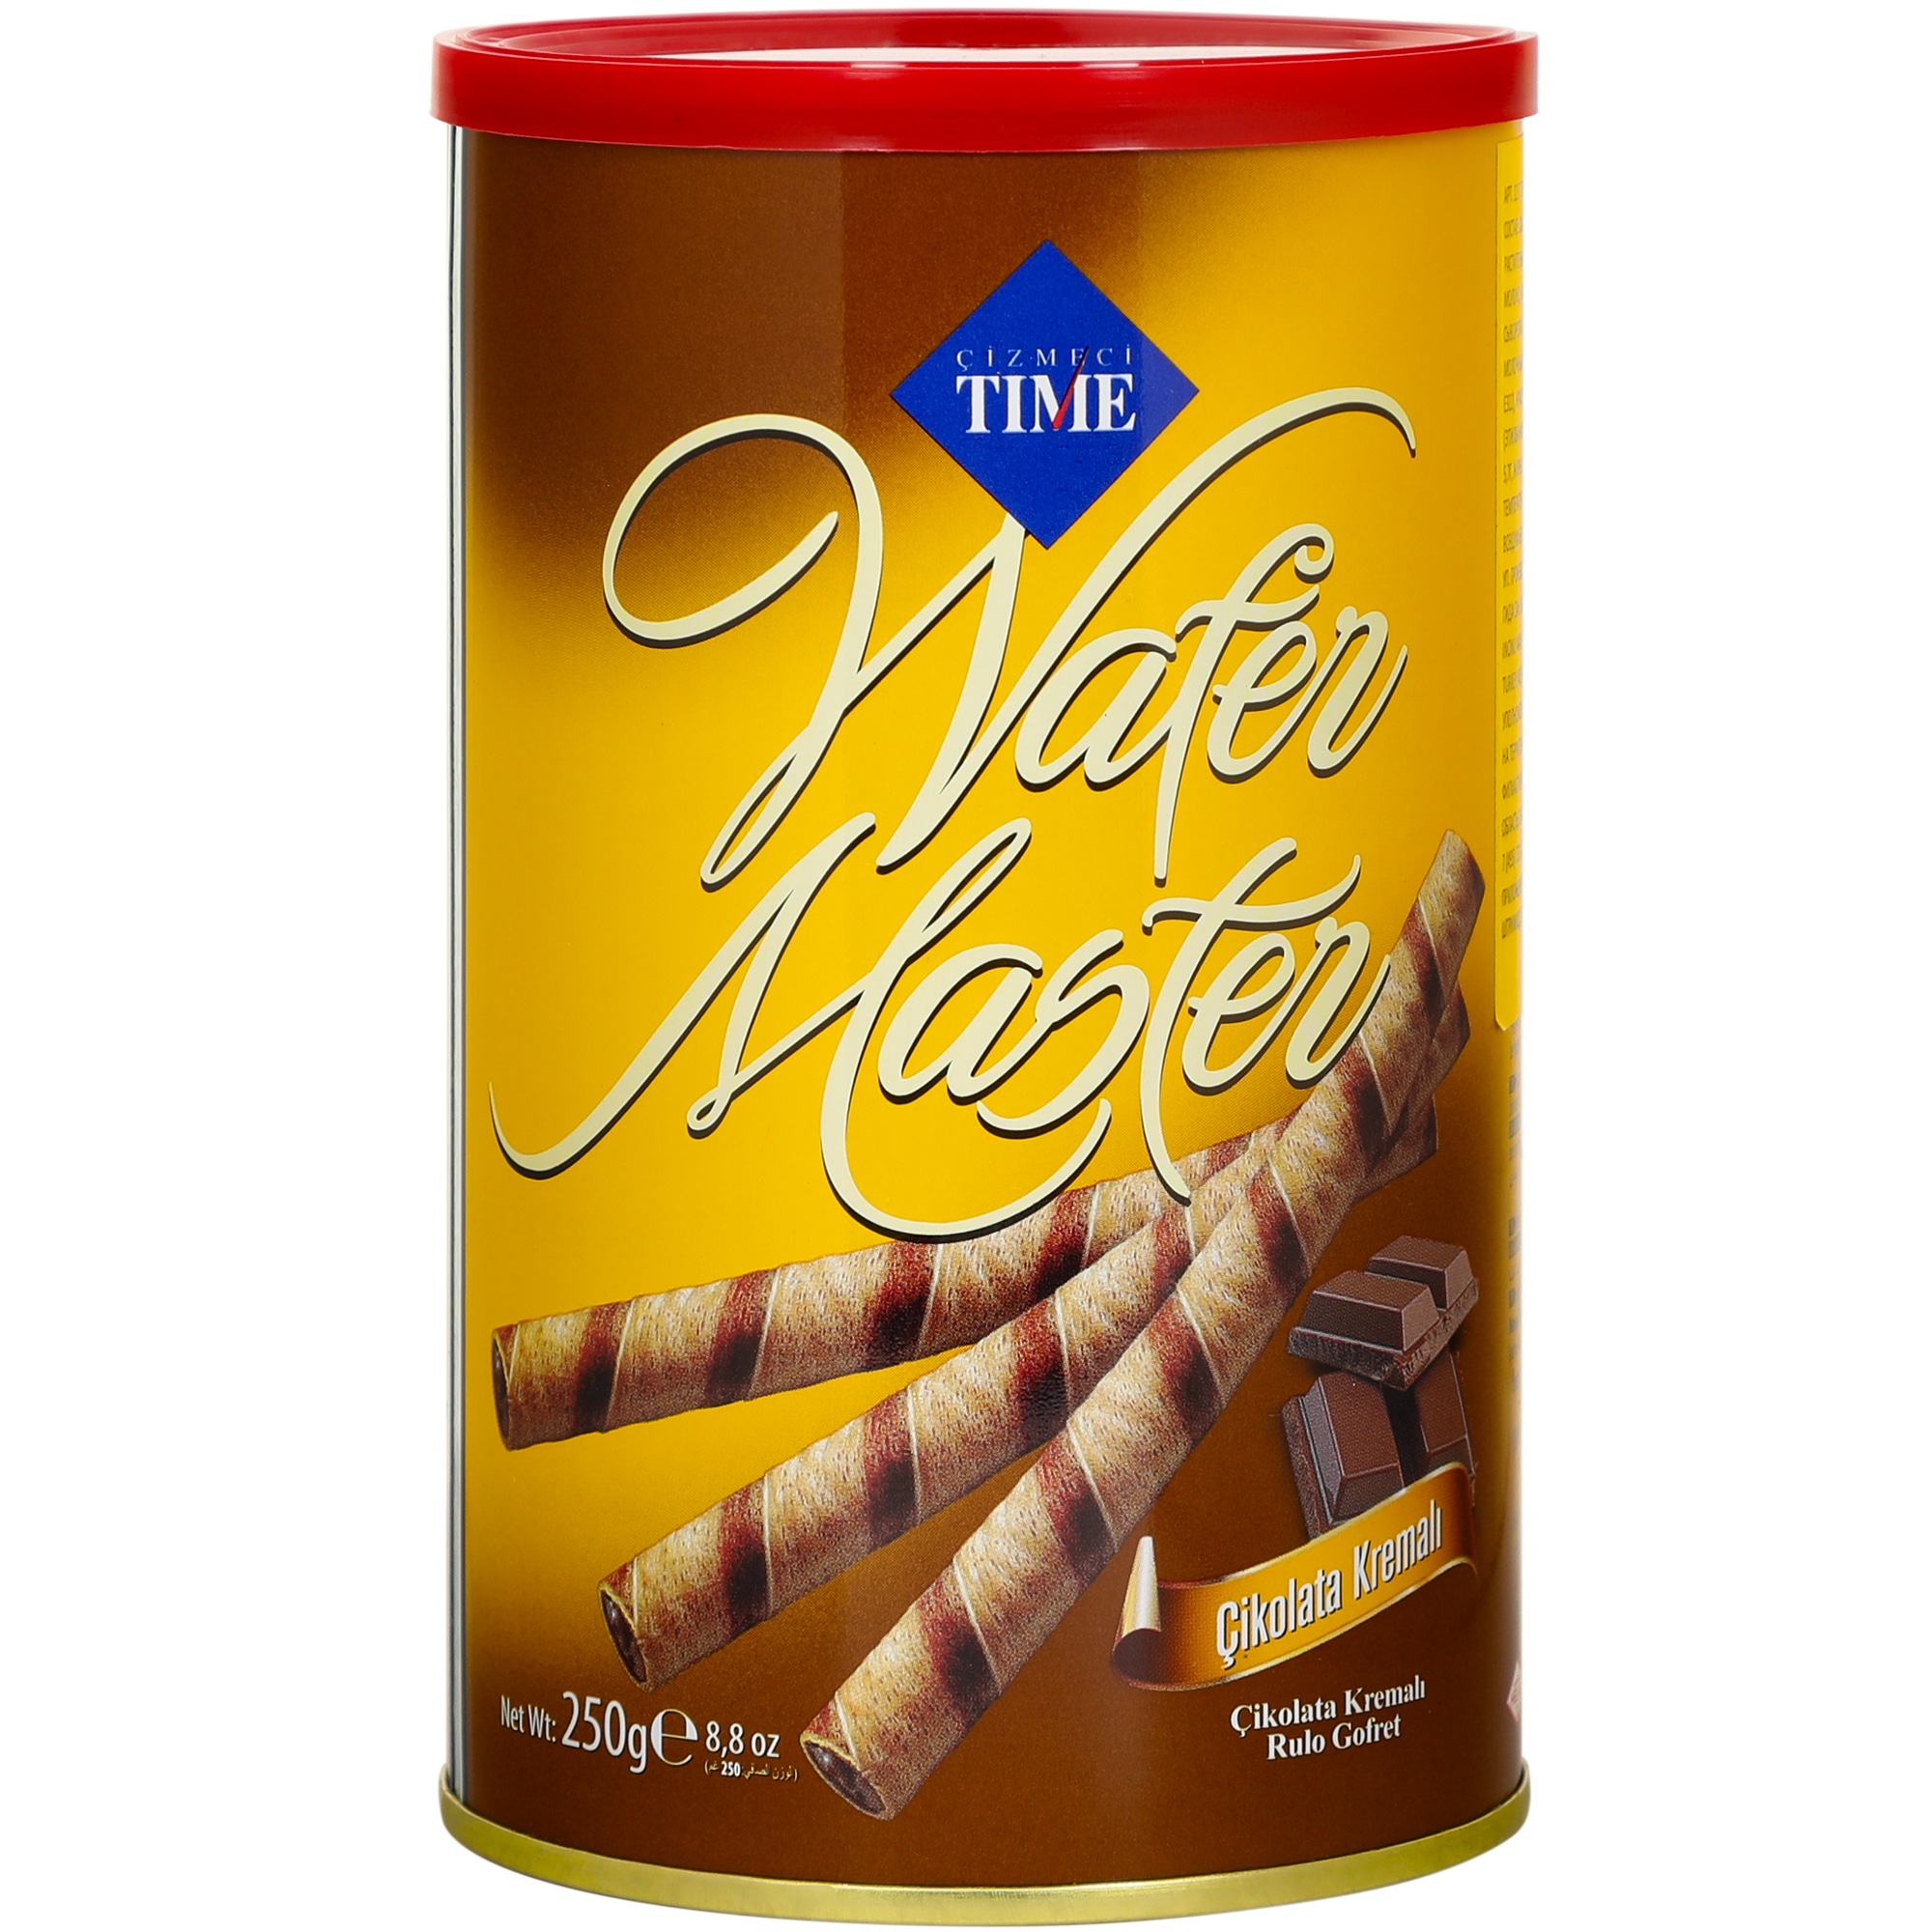 Трубочки Cizmeci Time вафельные wafer master шоколад, 250 г трубочки cizmeci time вафельные какао фундук 240 г